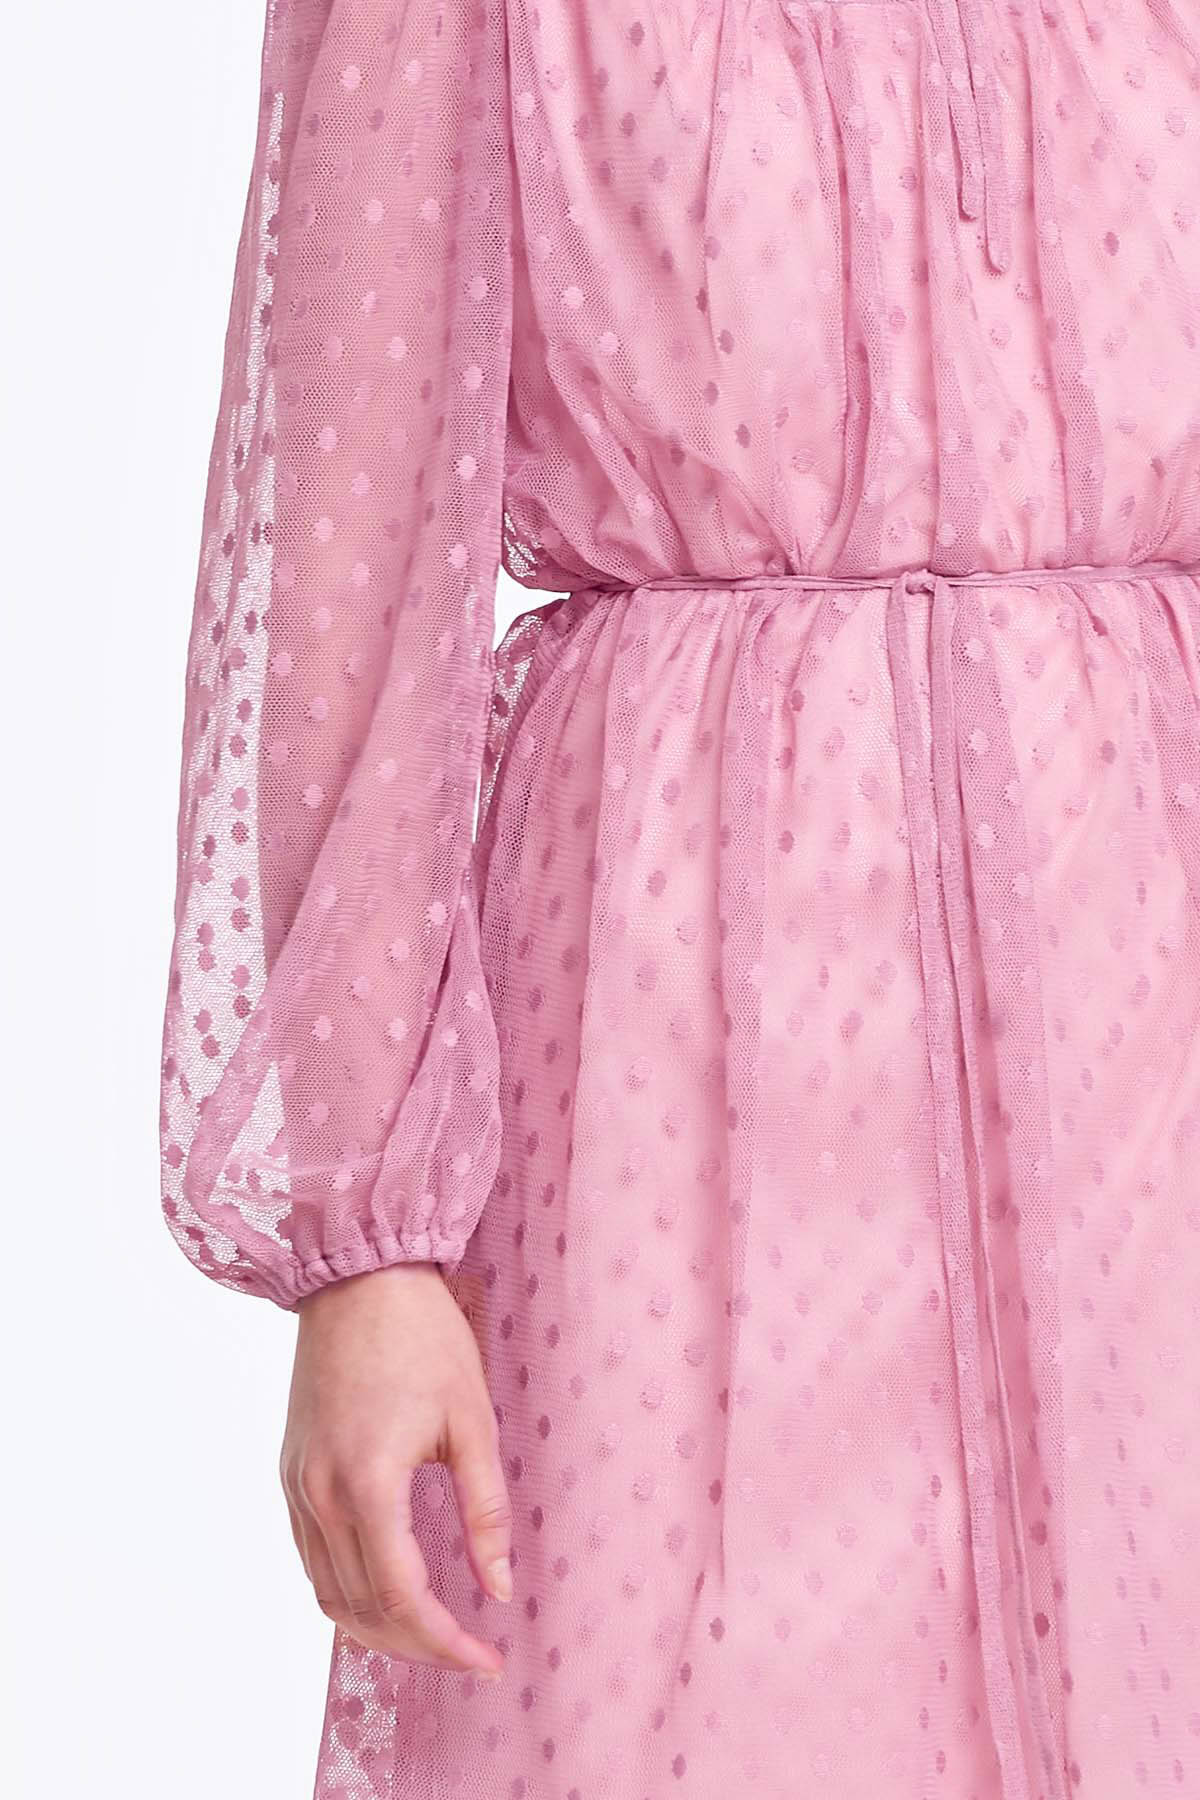 Pink dress with a polka dot print and ties, photo 3